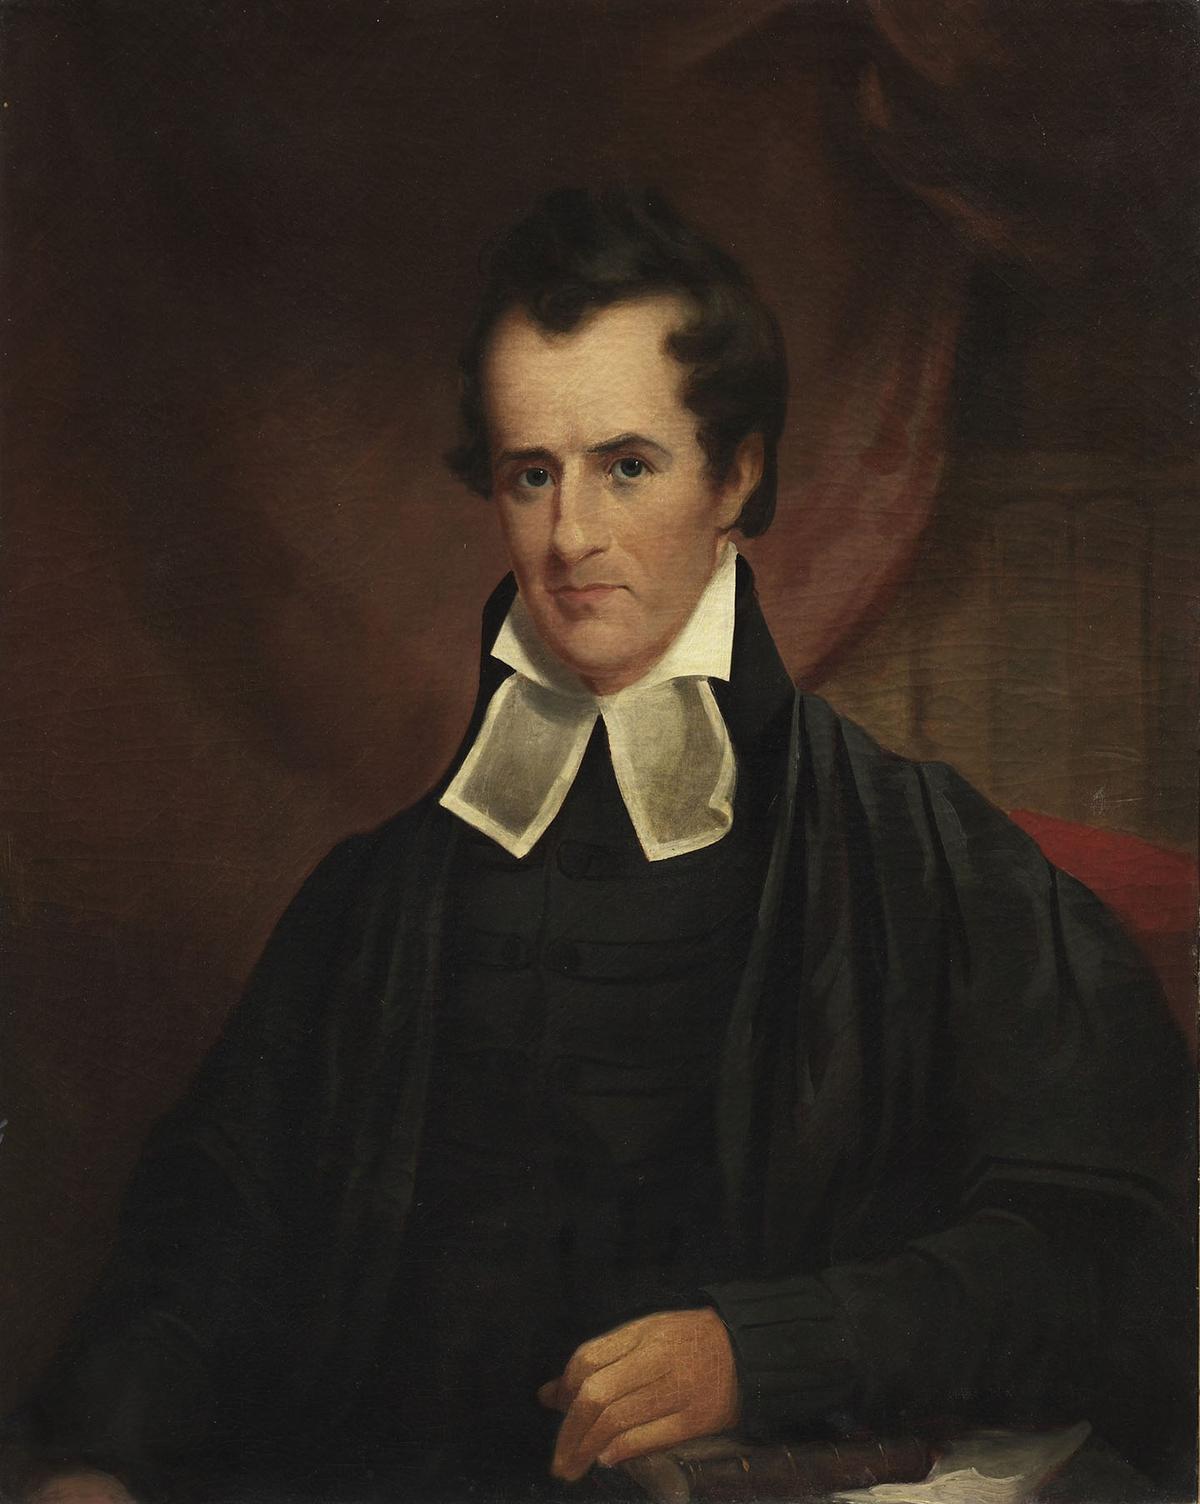 A portrait of Philip Lindsley, circa 1850, by George Dury. Oil on canvas. Princeton University Art Museum, N.J. (Public Domain)